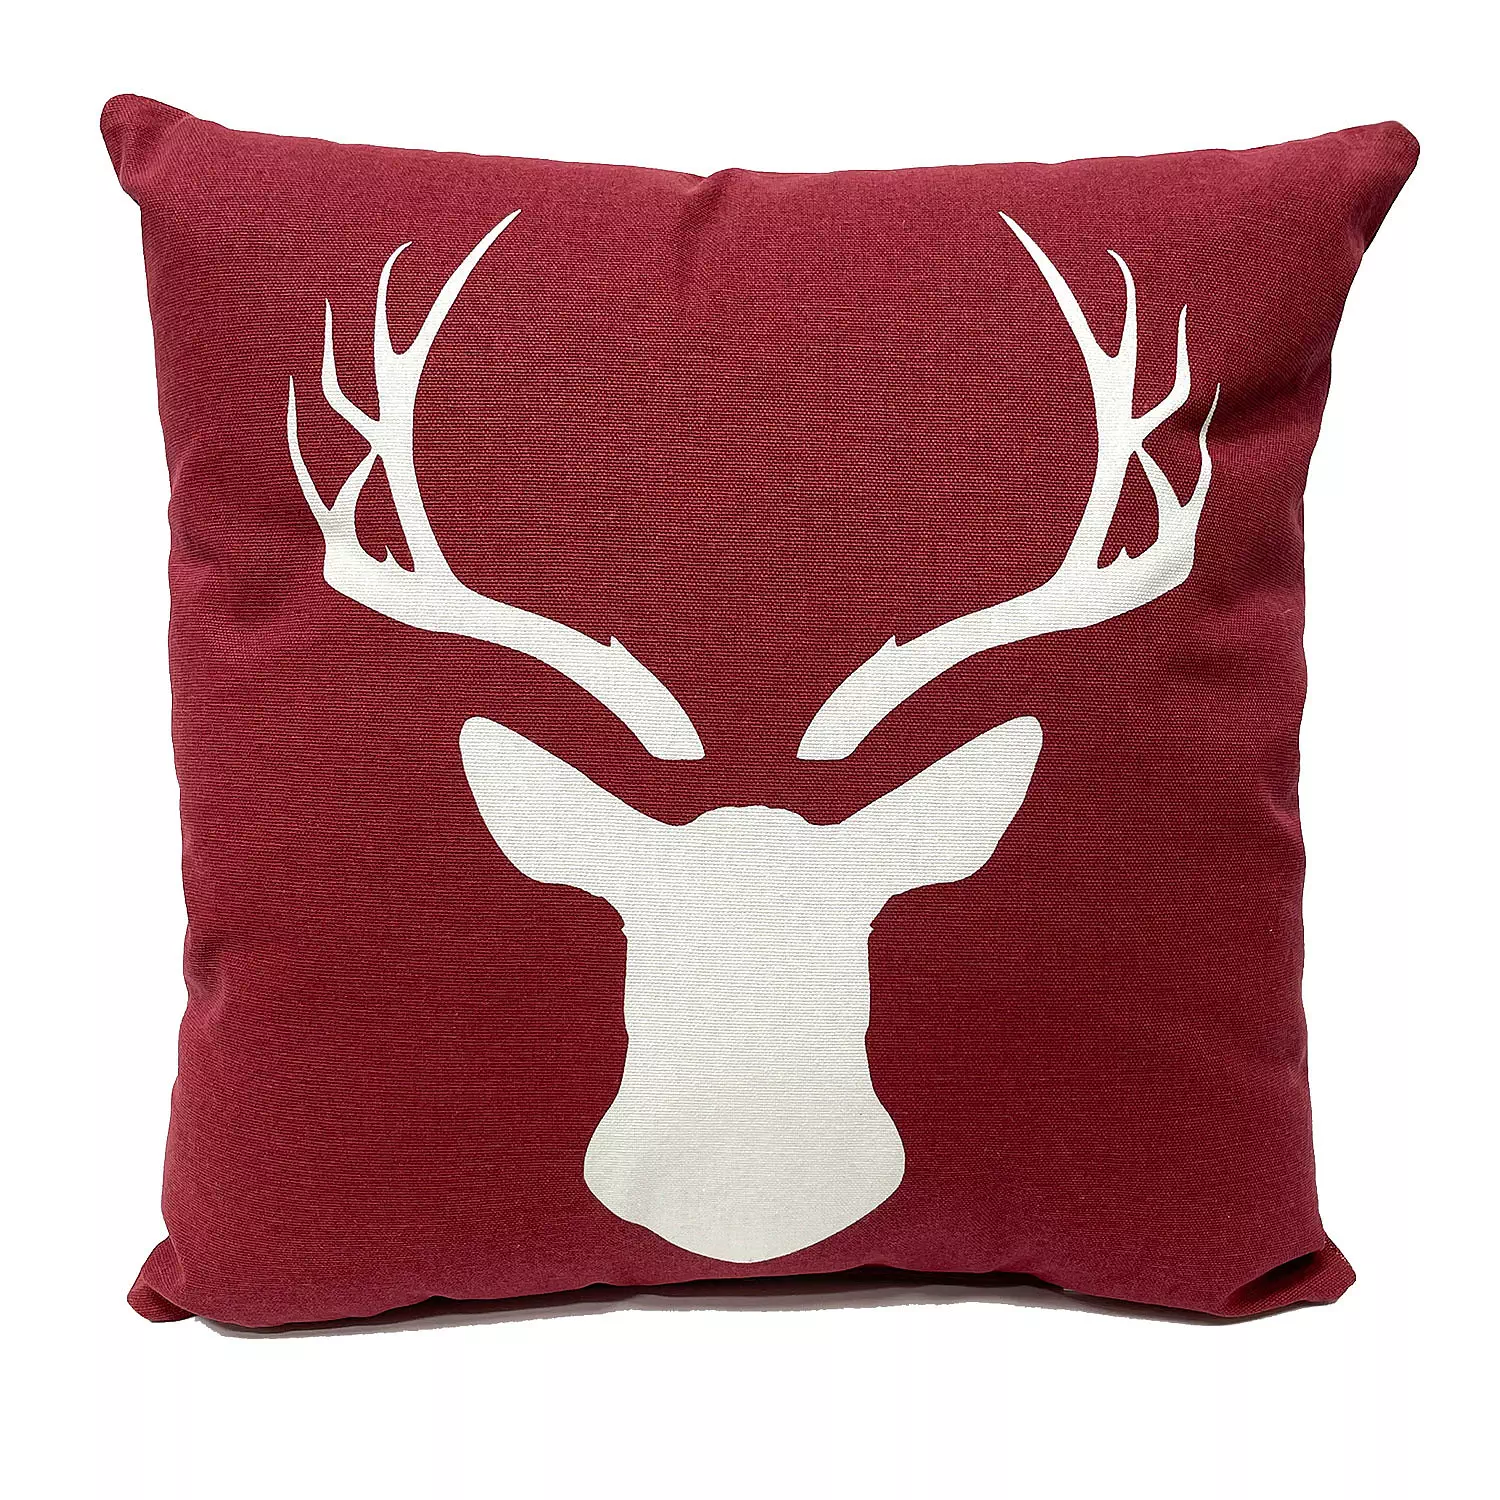 Rustic print decorative cushion, moose antlers, 16"x16"